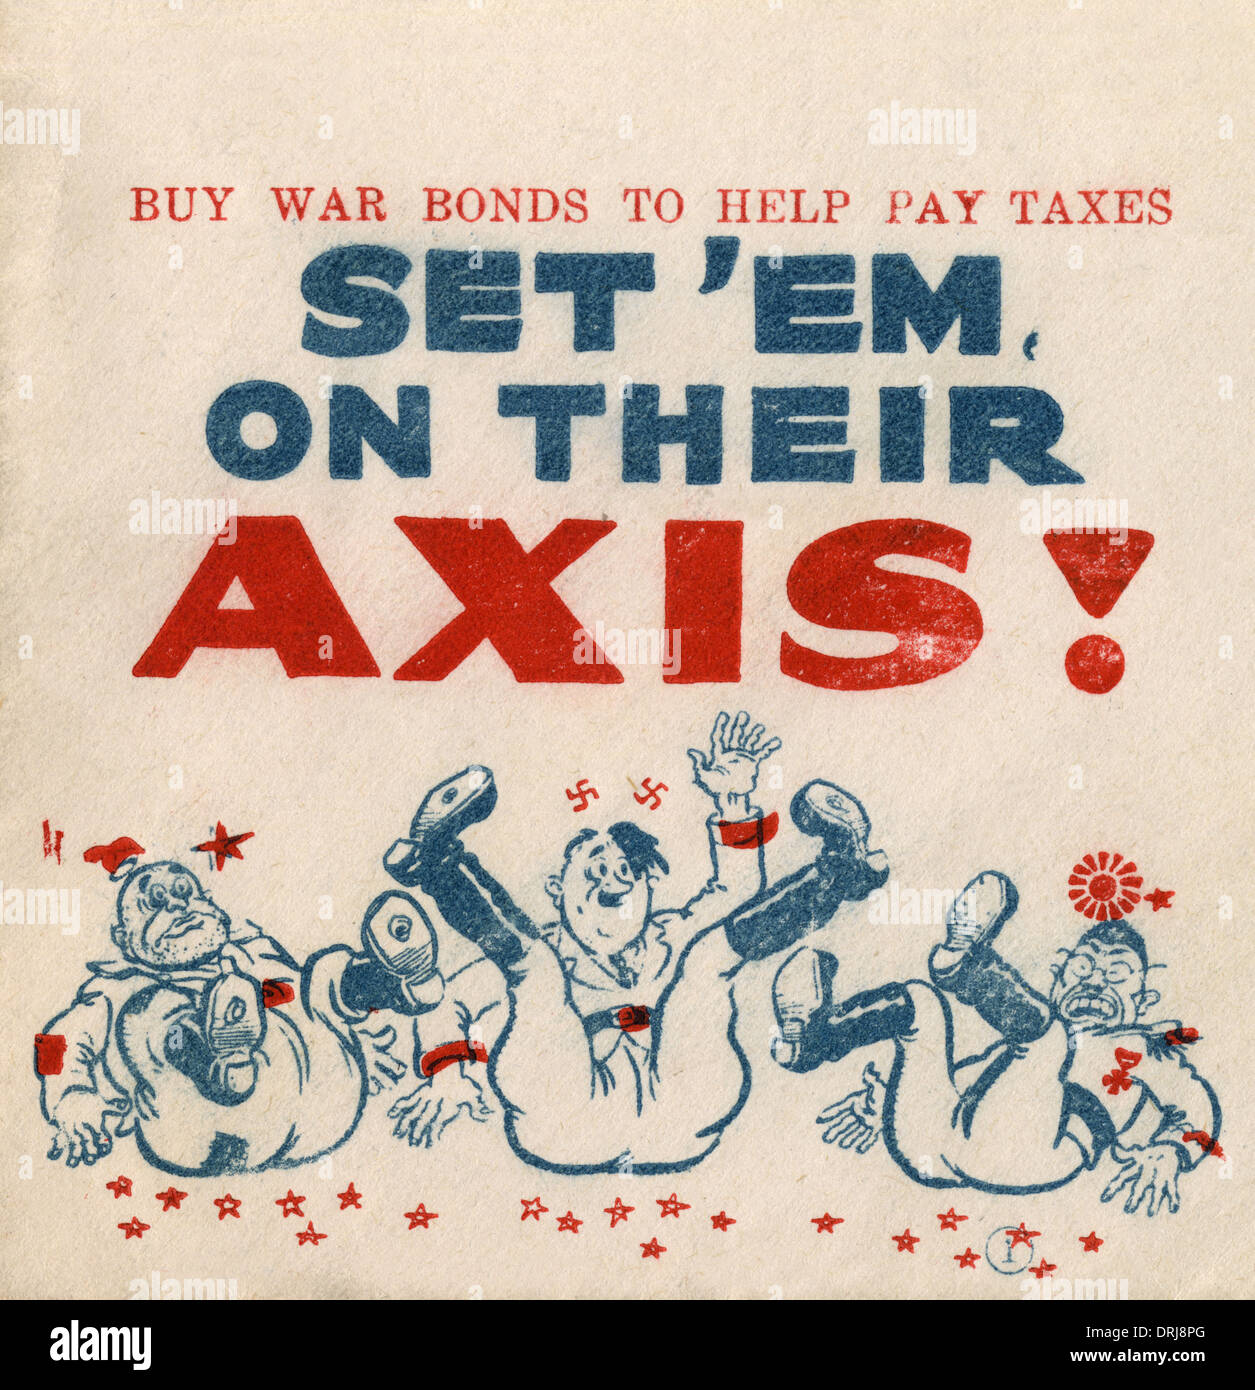 La segunda guerra mundial - comprar bonos de guerra - Primer día Foto de stock